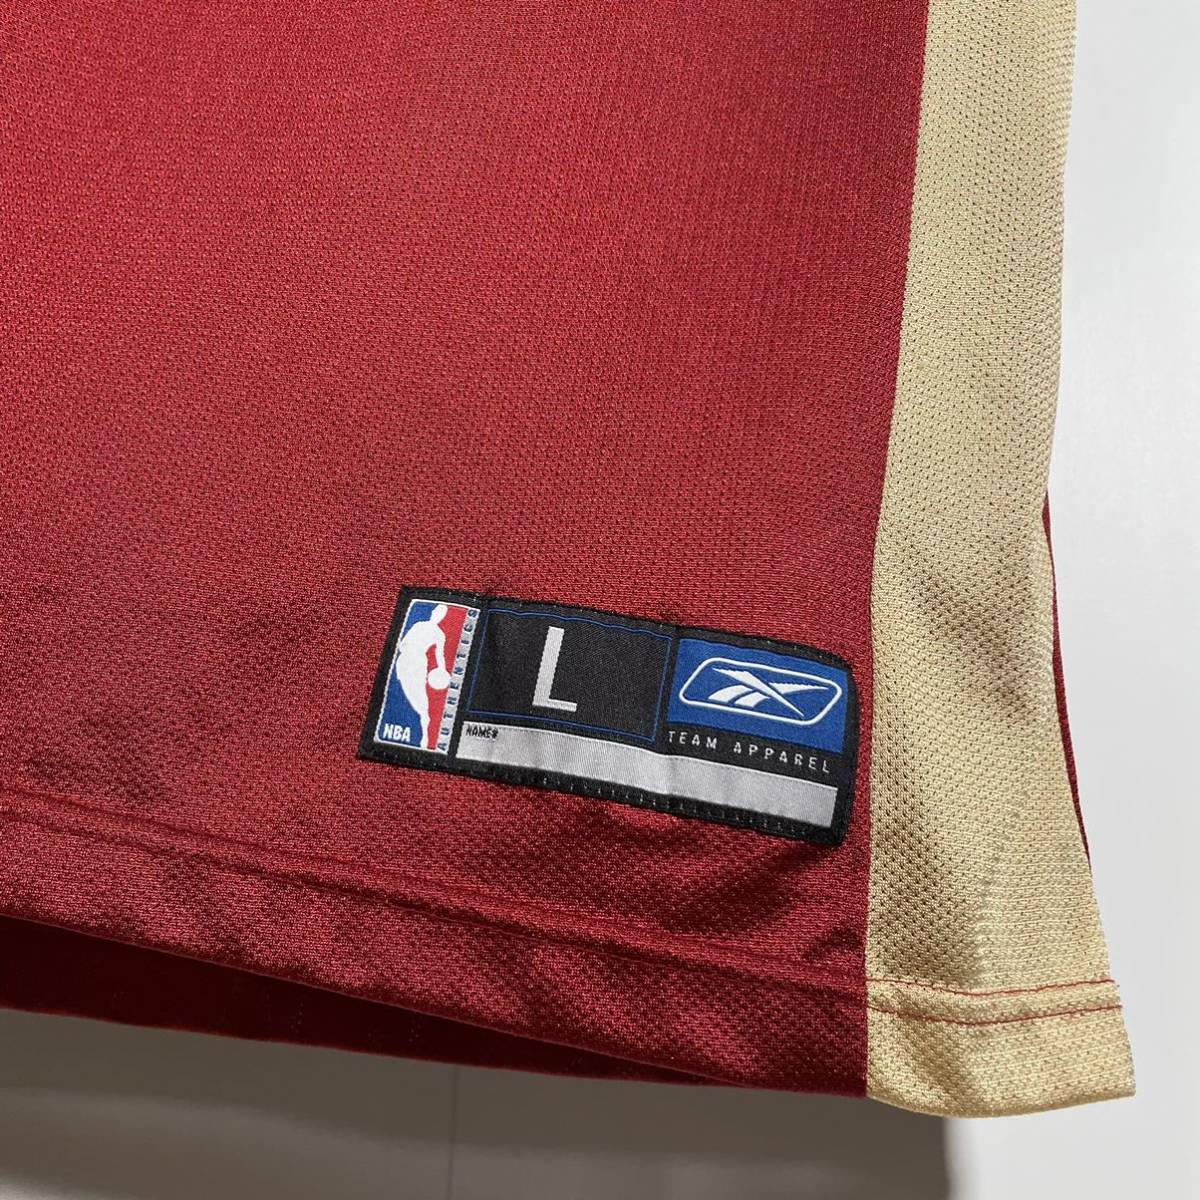 Reebok NBA Cleveland Cavaliers 23 LeBron James キャバリアーズ レブロン ジェームズ ユニフォーム  ゲームシャツ タンクトップ d350